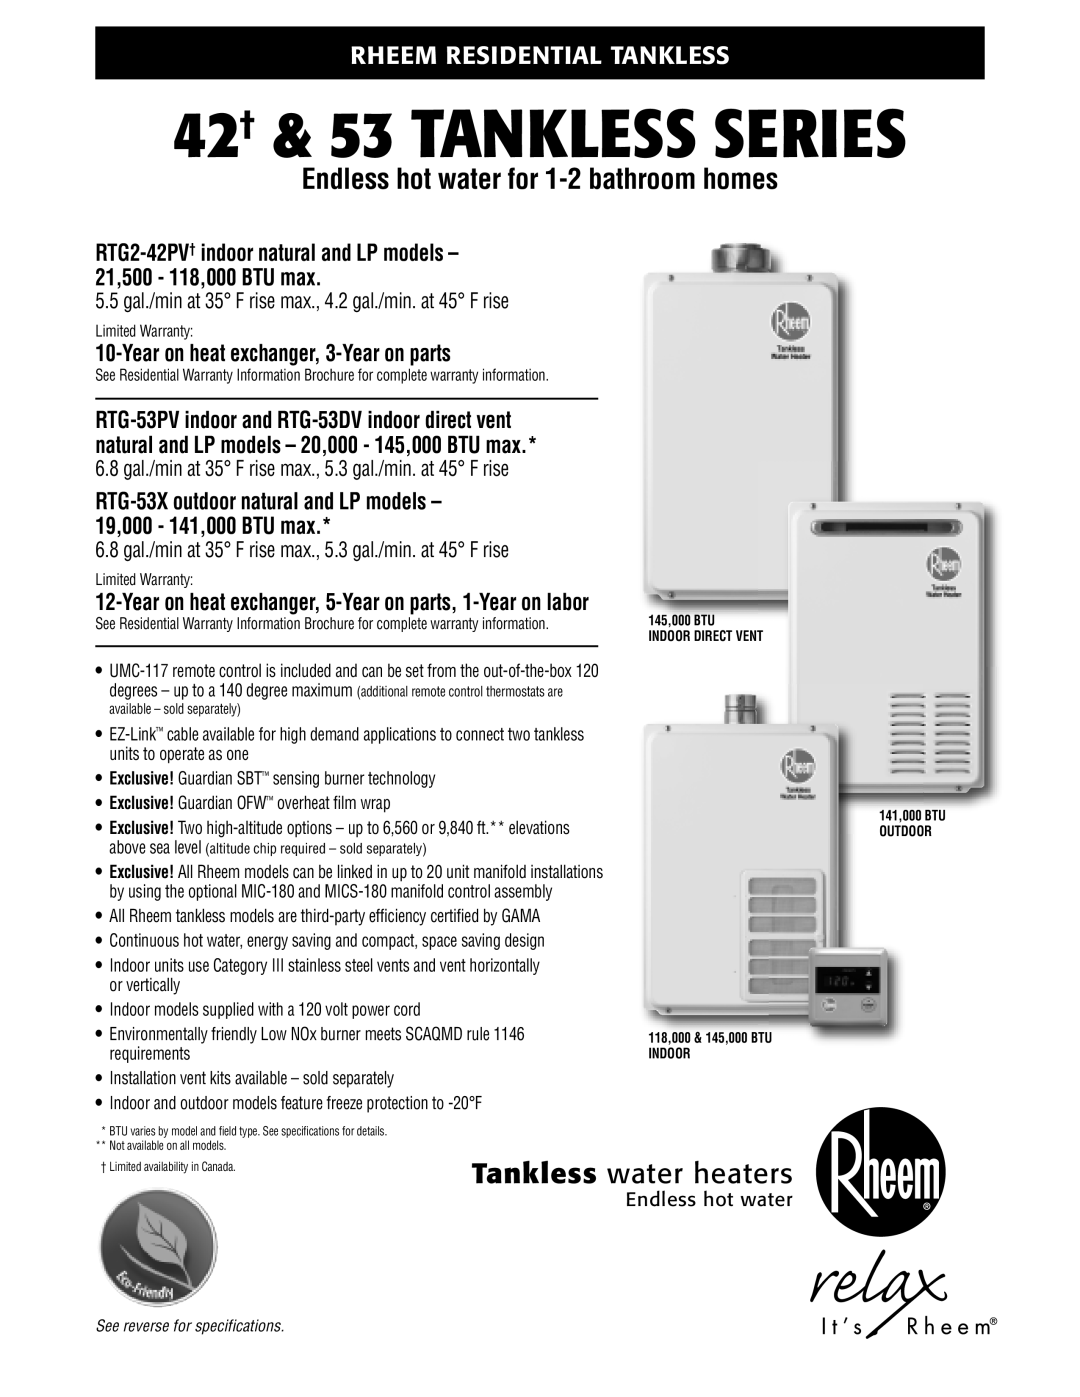 Rheem RTG-53PV, RTG-53X warranty Year on heat exchanger,3-Year on parts, Limited Warranty, 118,000 & 145,000 BTU INDOOR 